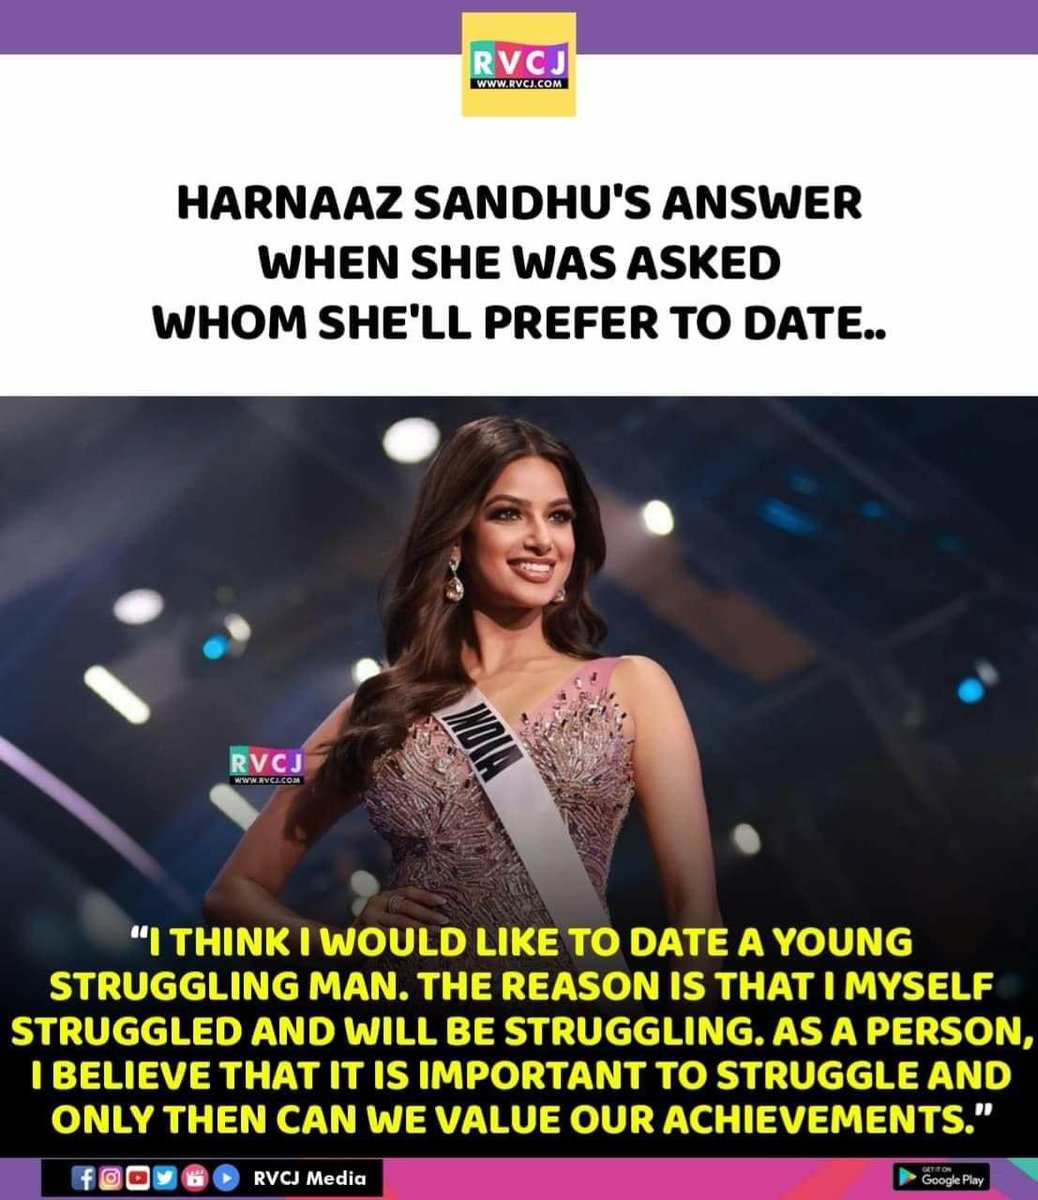 Harnaaz Sandhu’s answer..
#harnaazsandhu #harnaazkaursandhu #missuniverse #missuniverse2021 #rvcjmovies